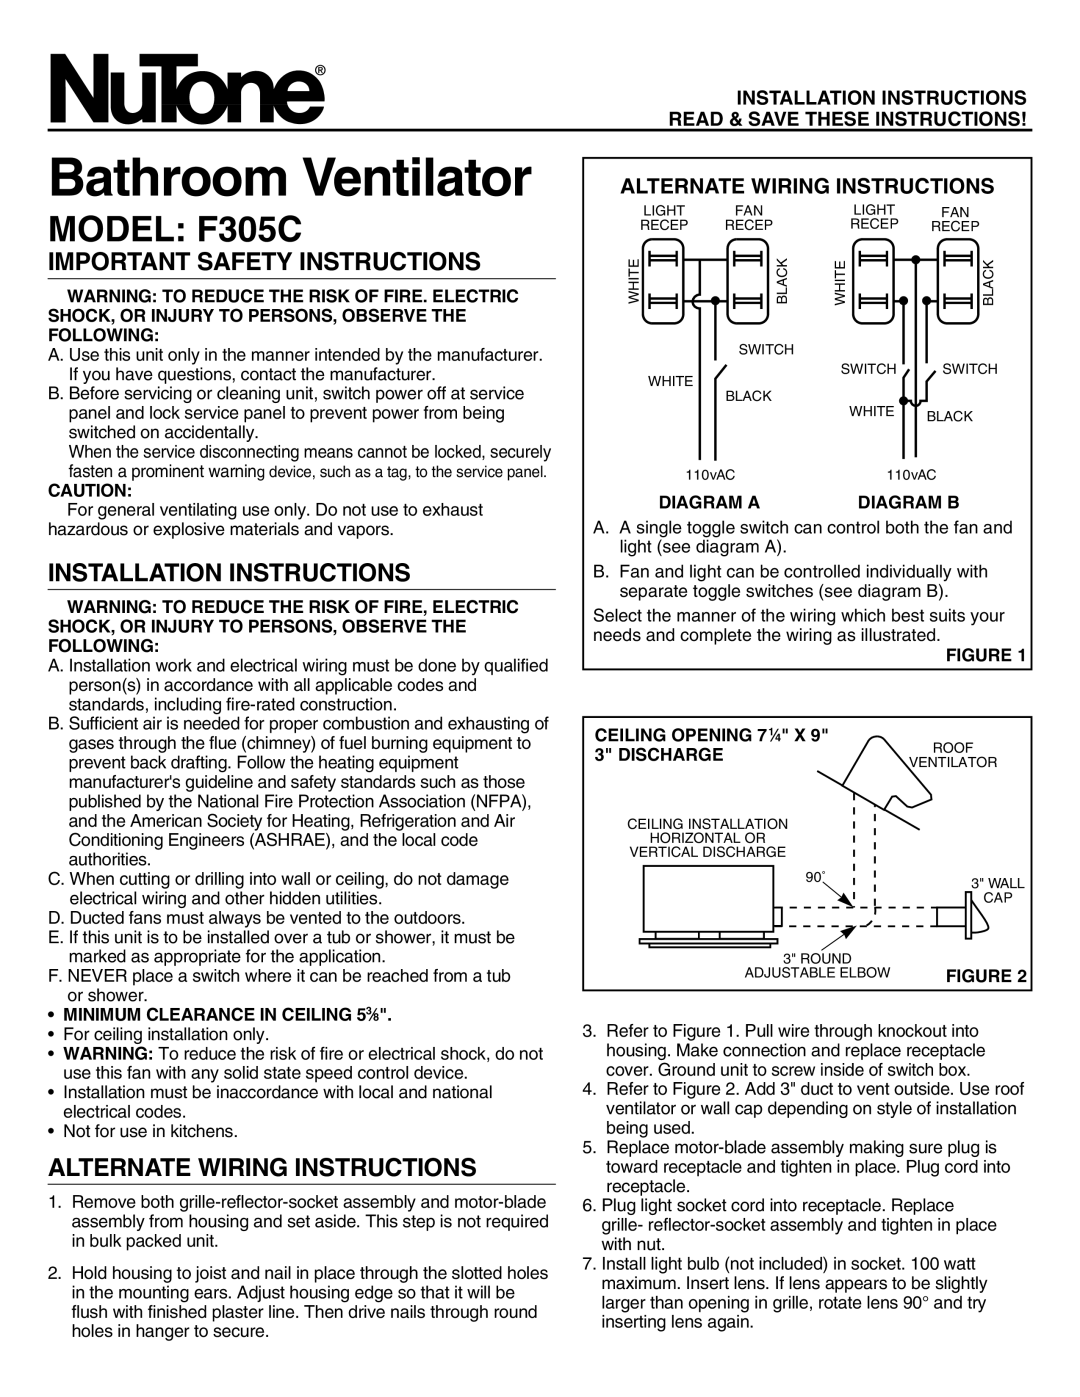 NuTone installation instructions Bathroom Ventilator, MODEL F305C, Important Safety Instructions, Wiring Instructions 